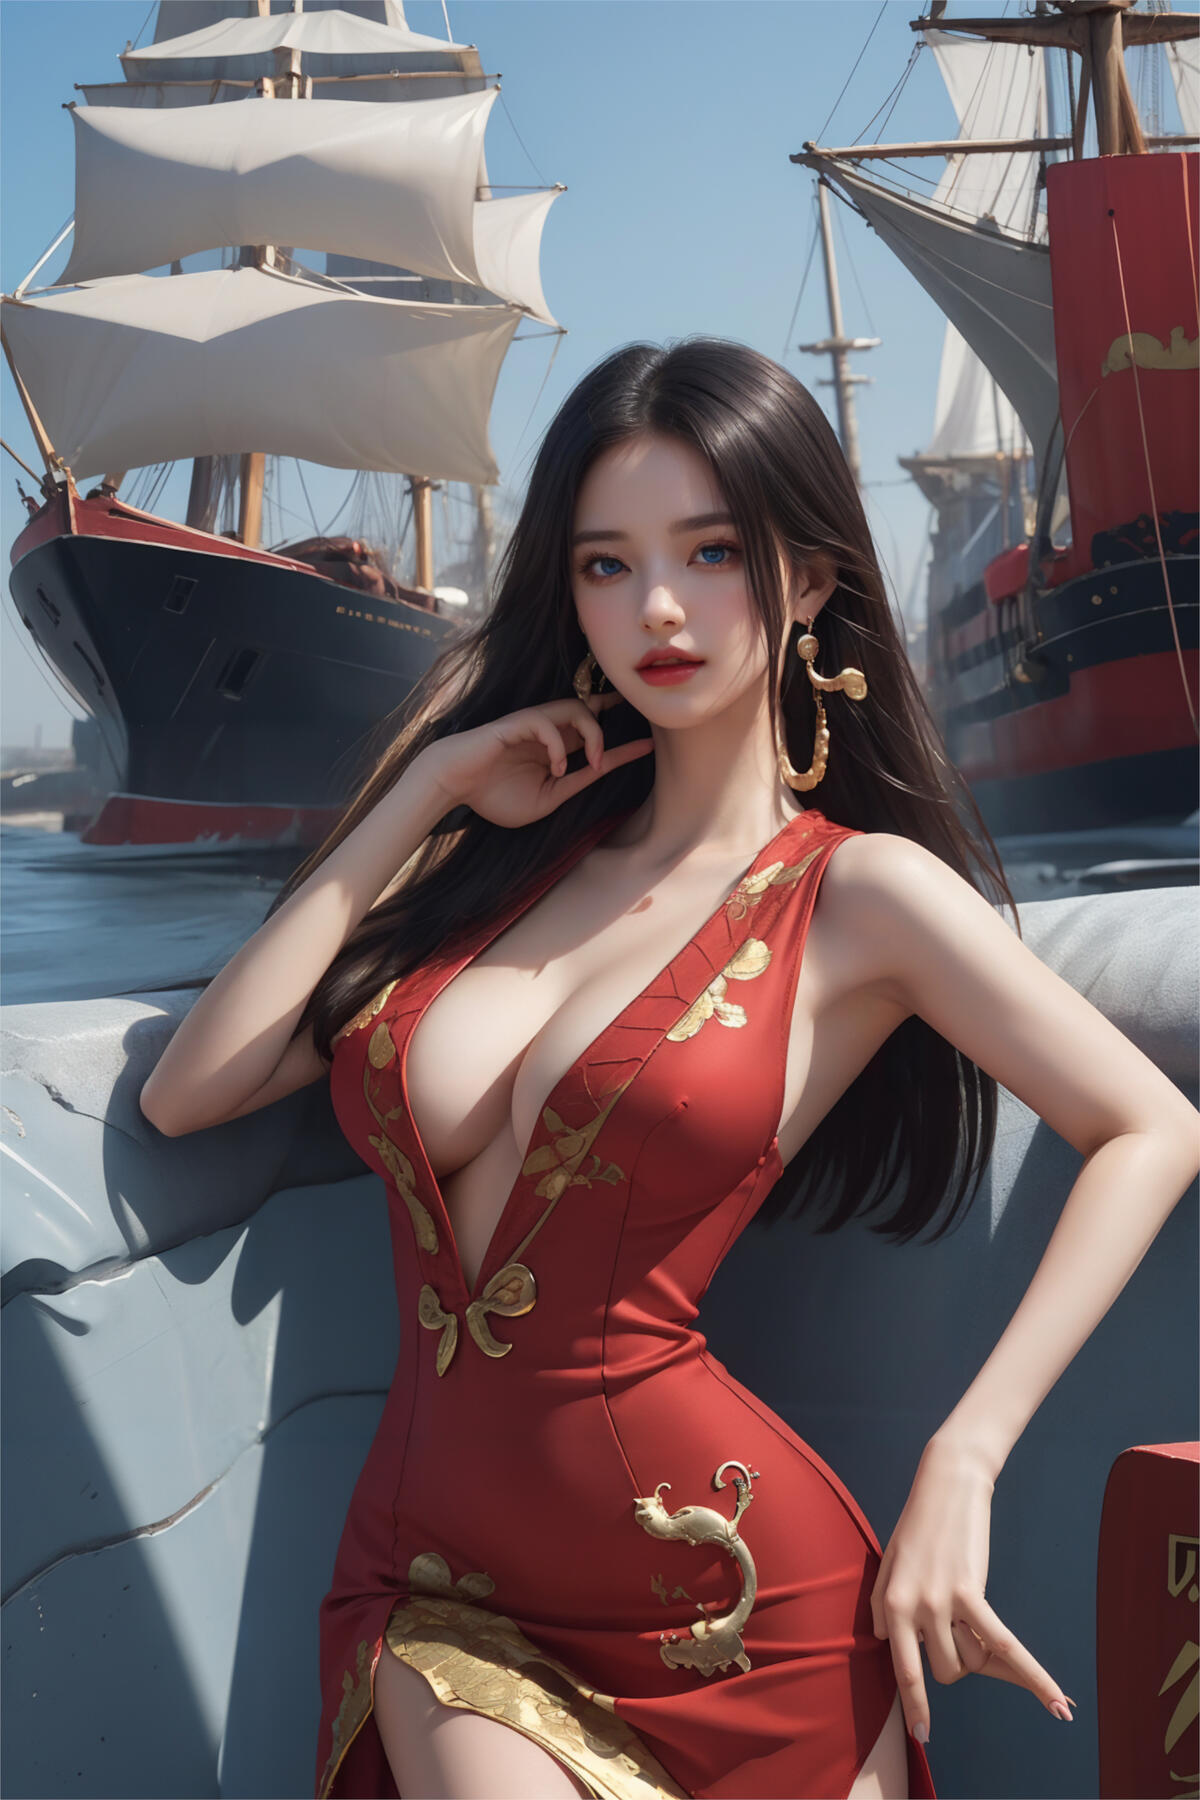 Рисунок девушки на фоне кораблей